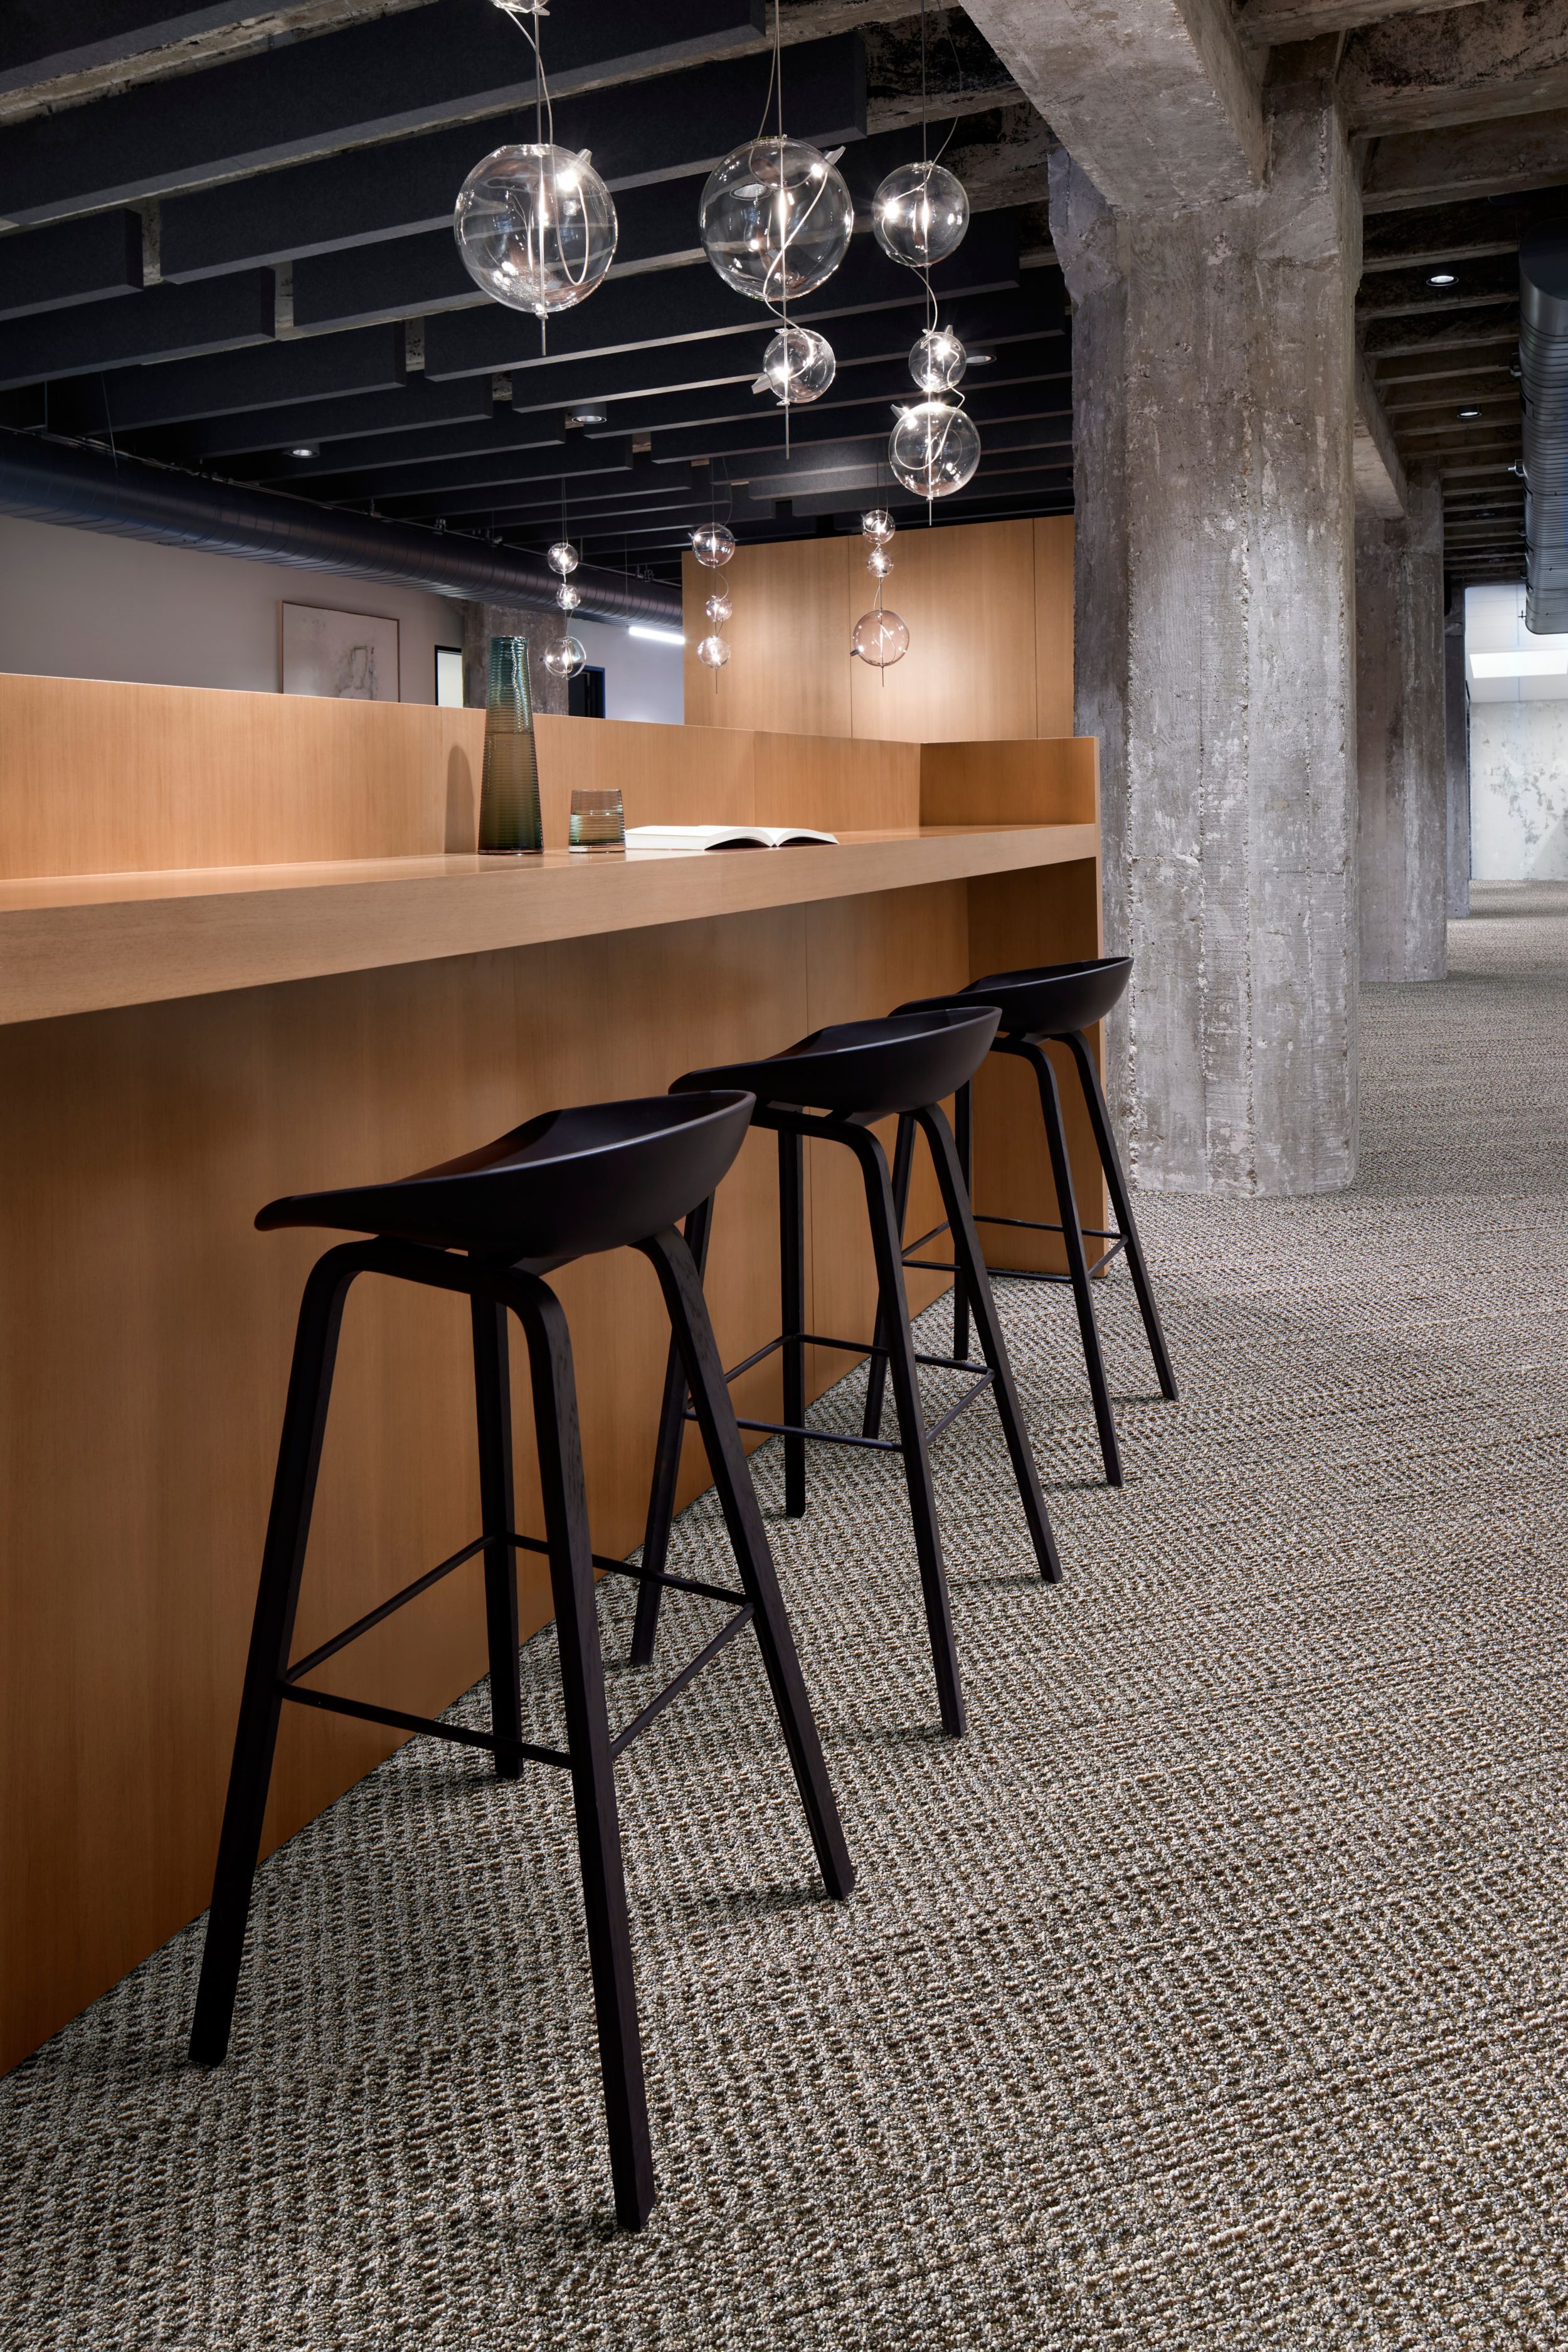 image Interface E615 plank carpet tile in workspace cafe numéro 1